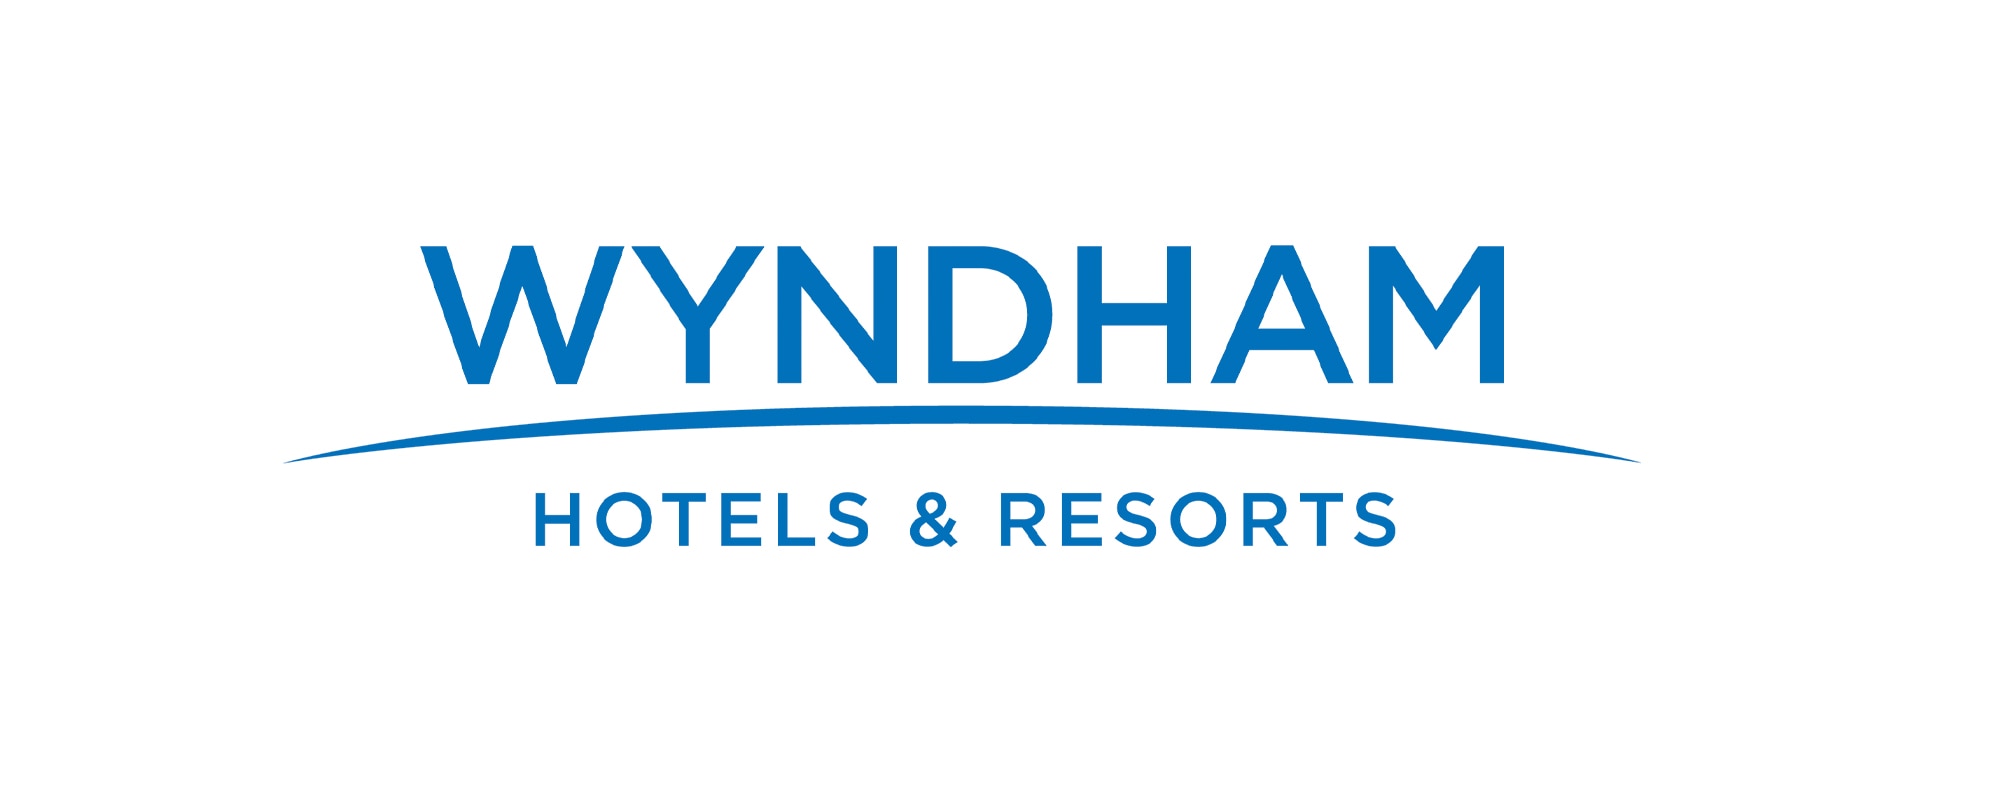 Wyndham Hotels & Resorts logo. 